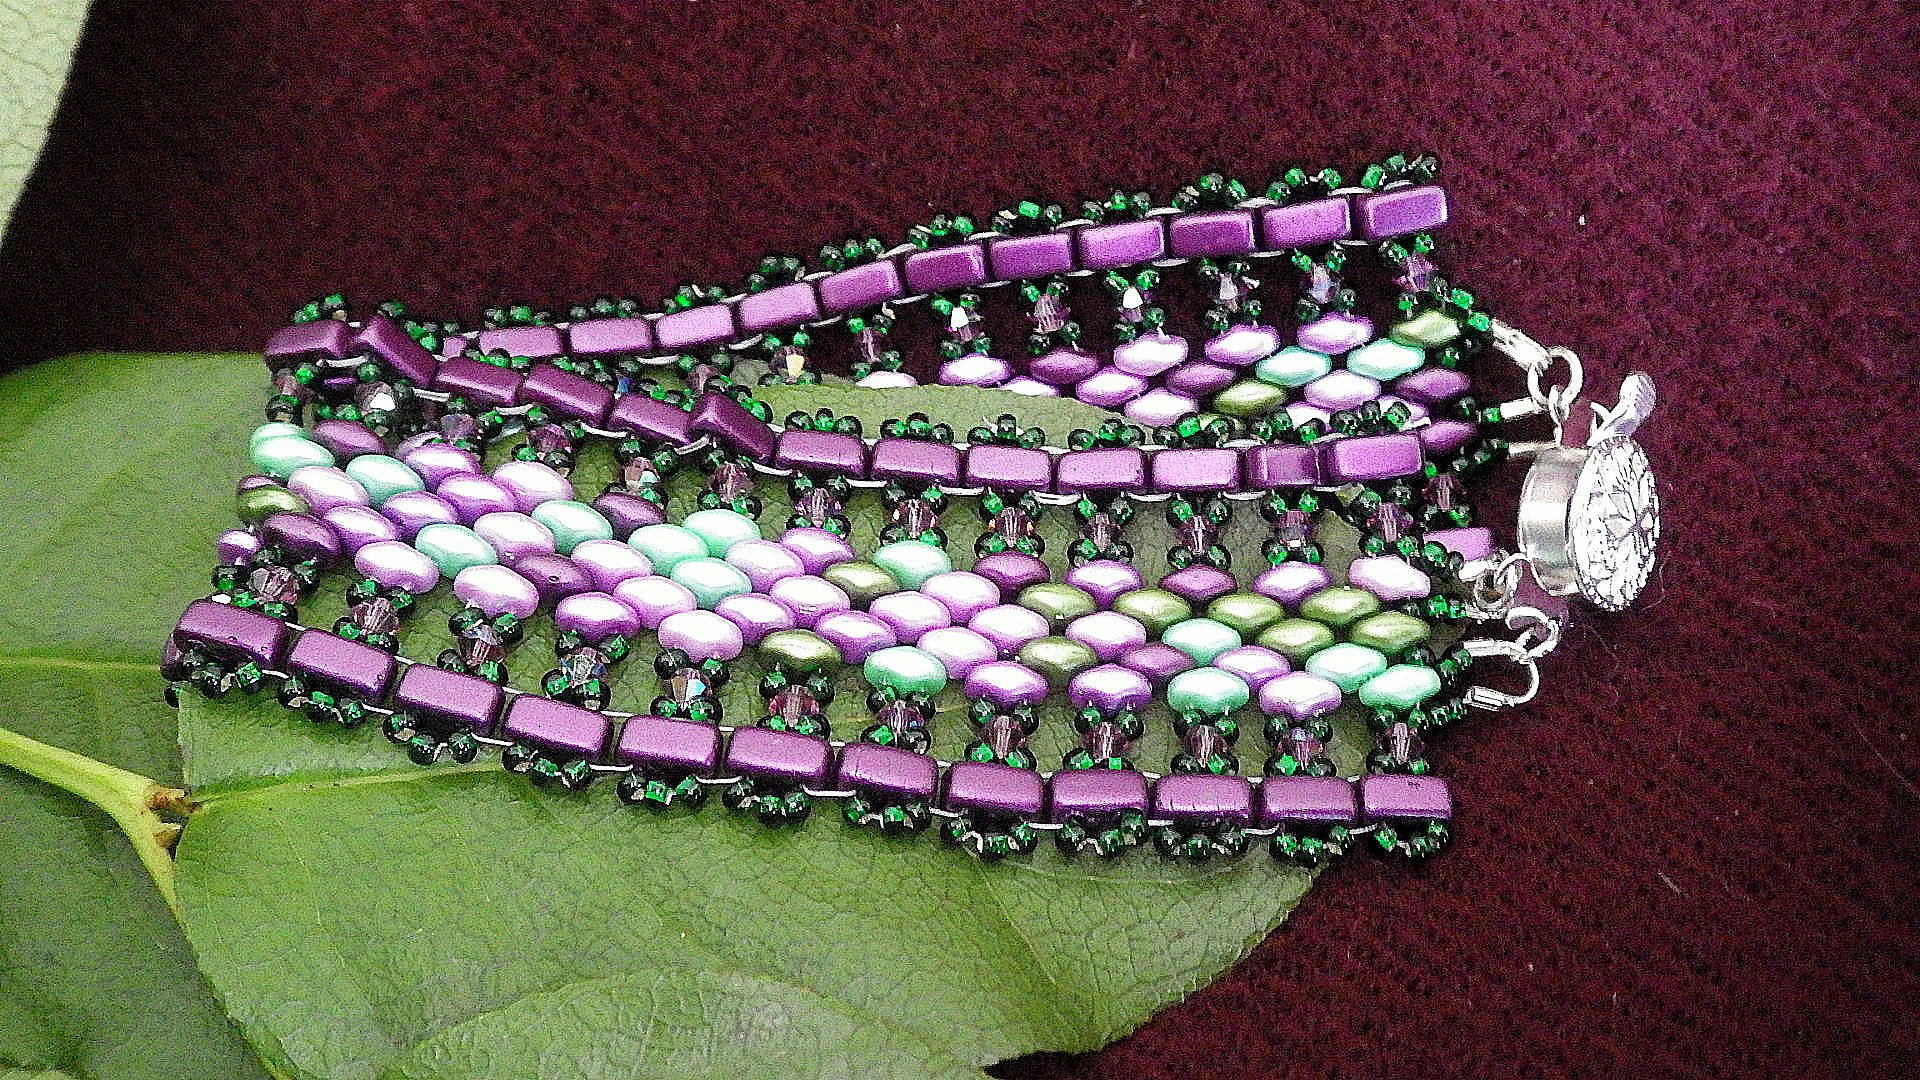  Seed bead bracelet - Purple edge, green fringe, greens/purples inside with silver findings  8.5”  $45.00 